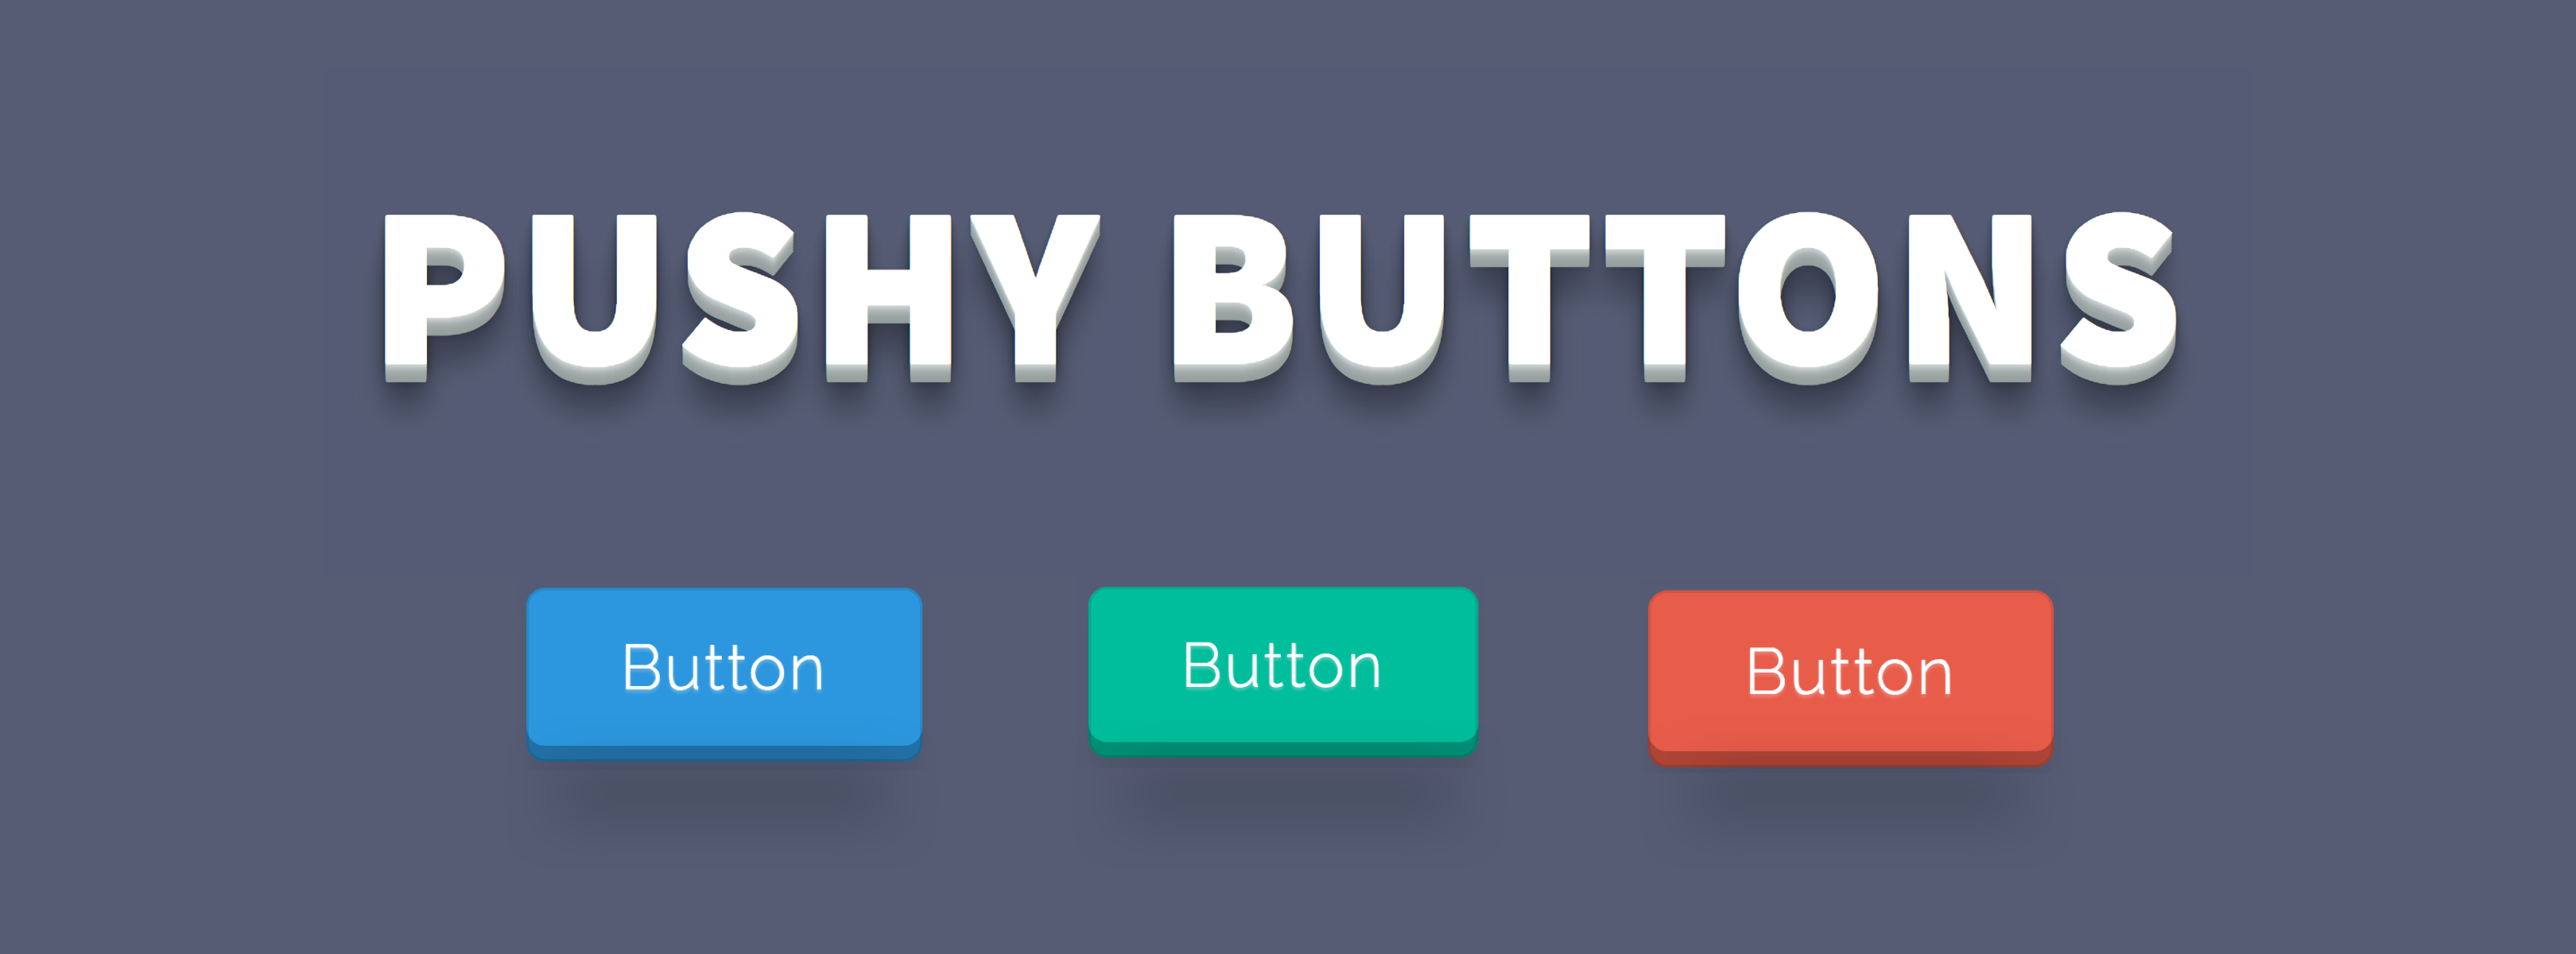 pushy-buttons